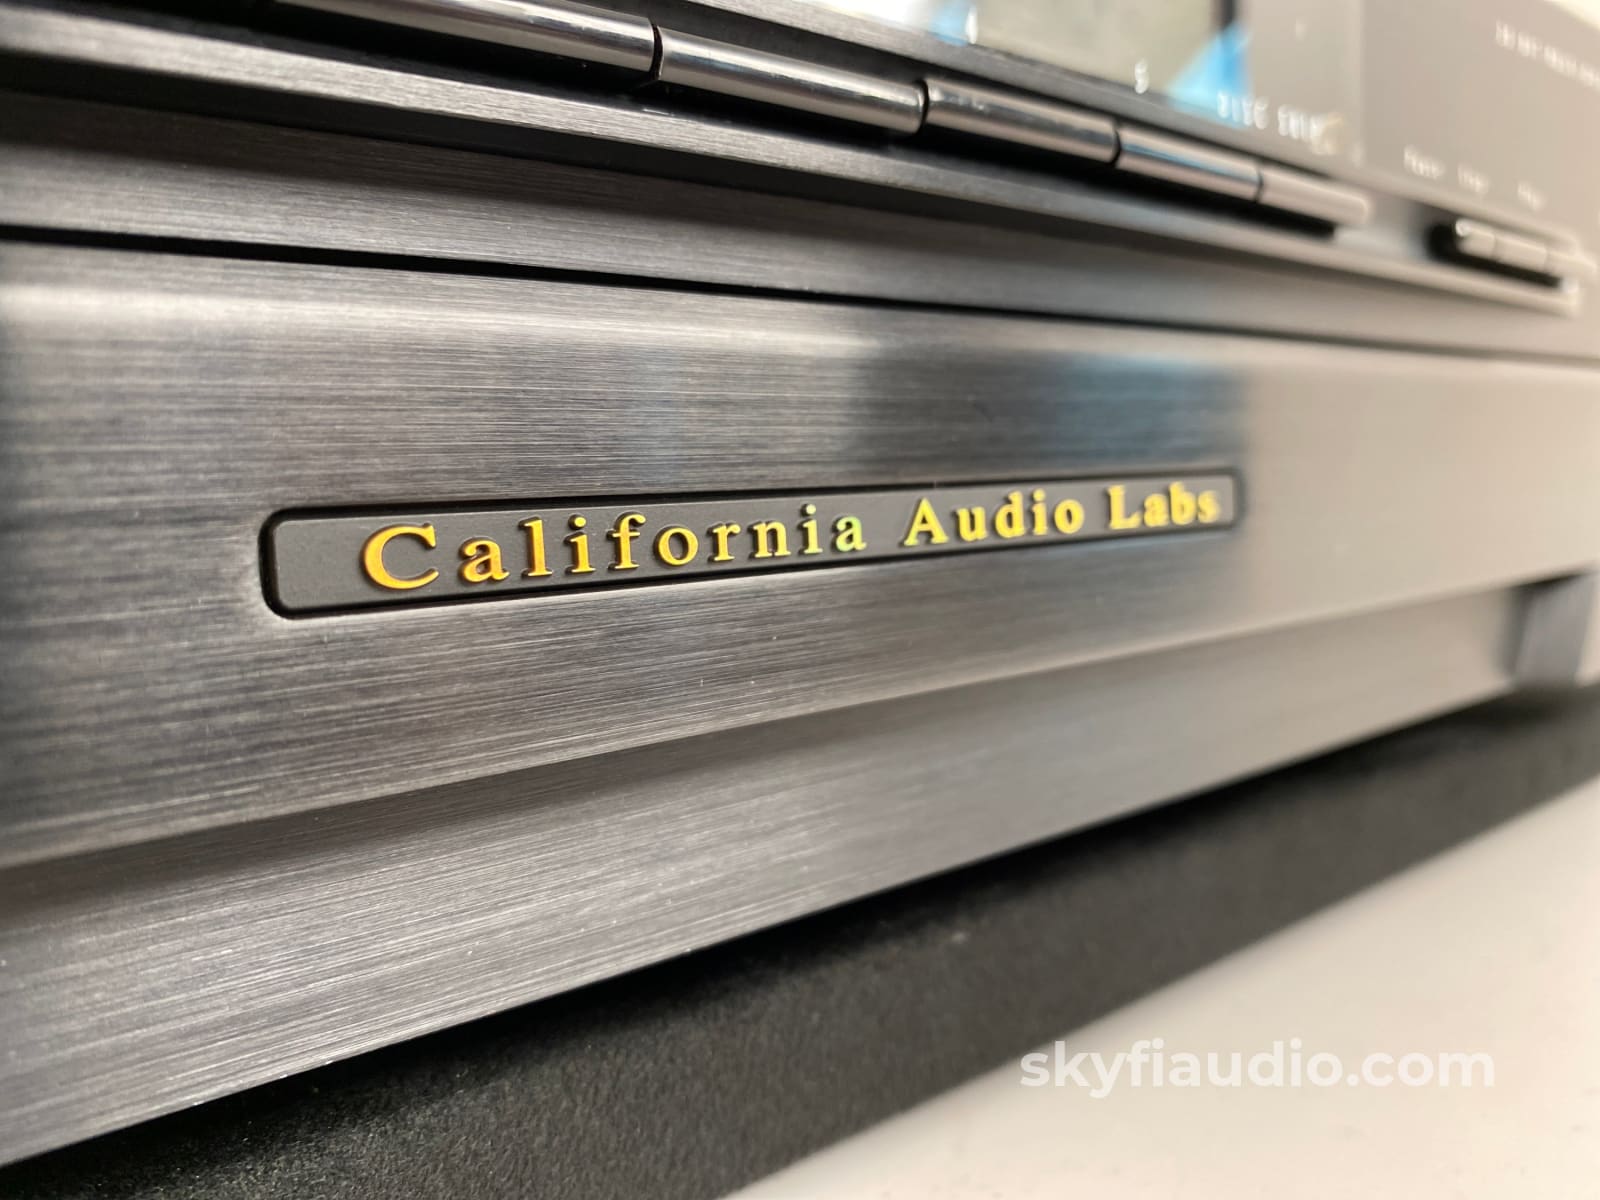 Cal (California Audio Labs) Cl-10 Cd Changer 20-Bit + Hdcd Capable Digital